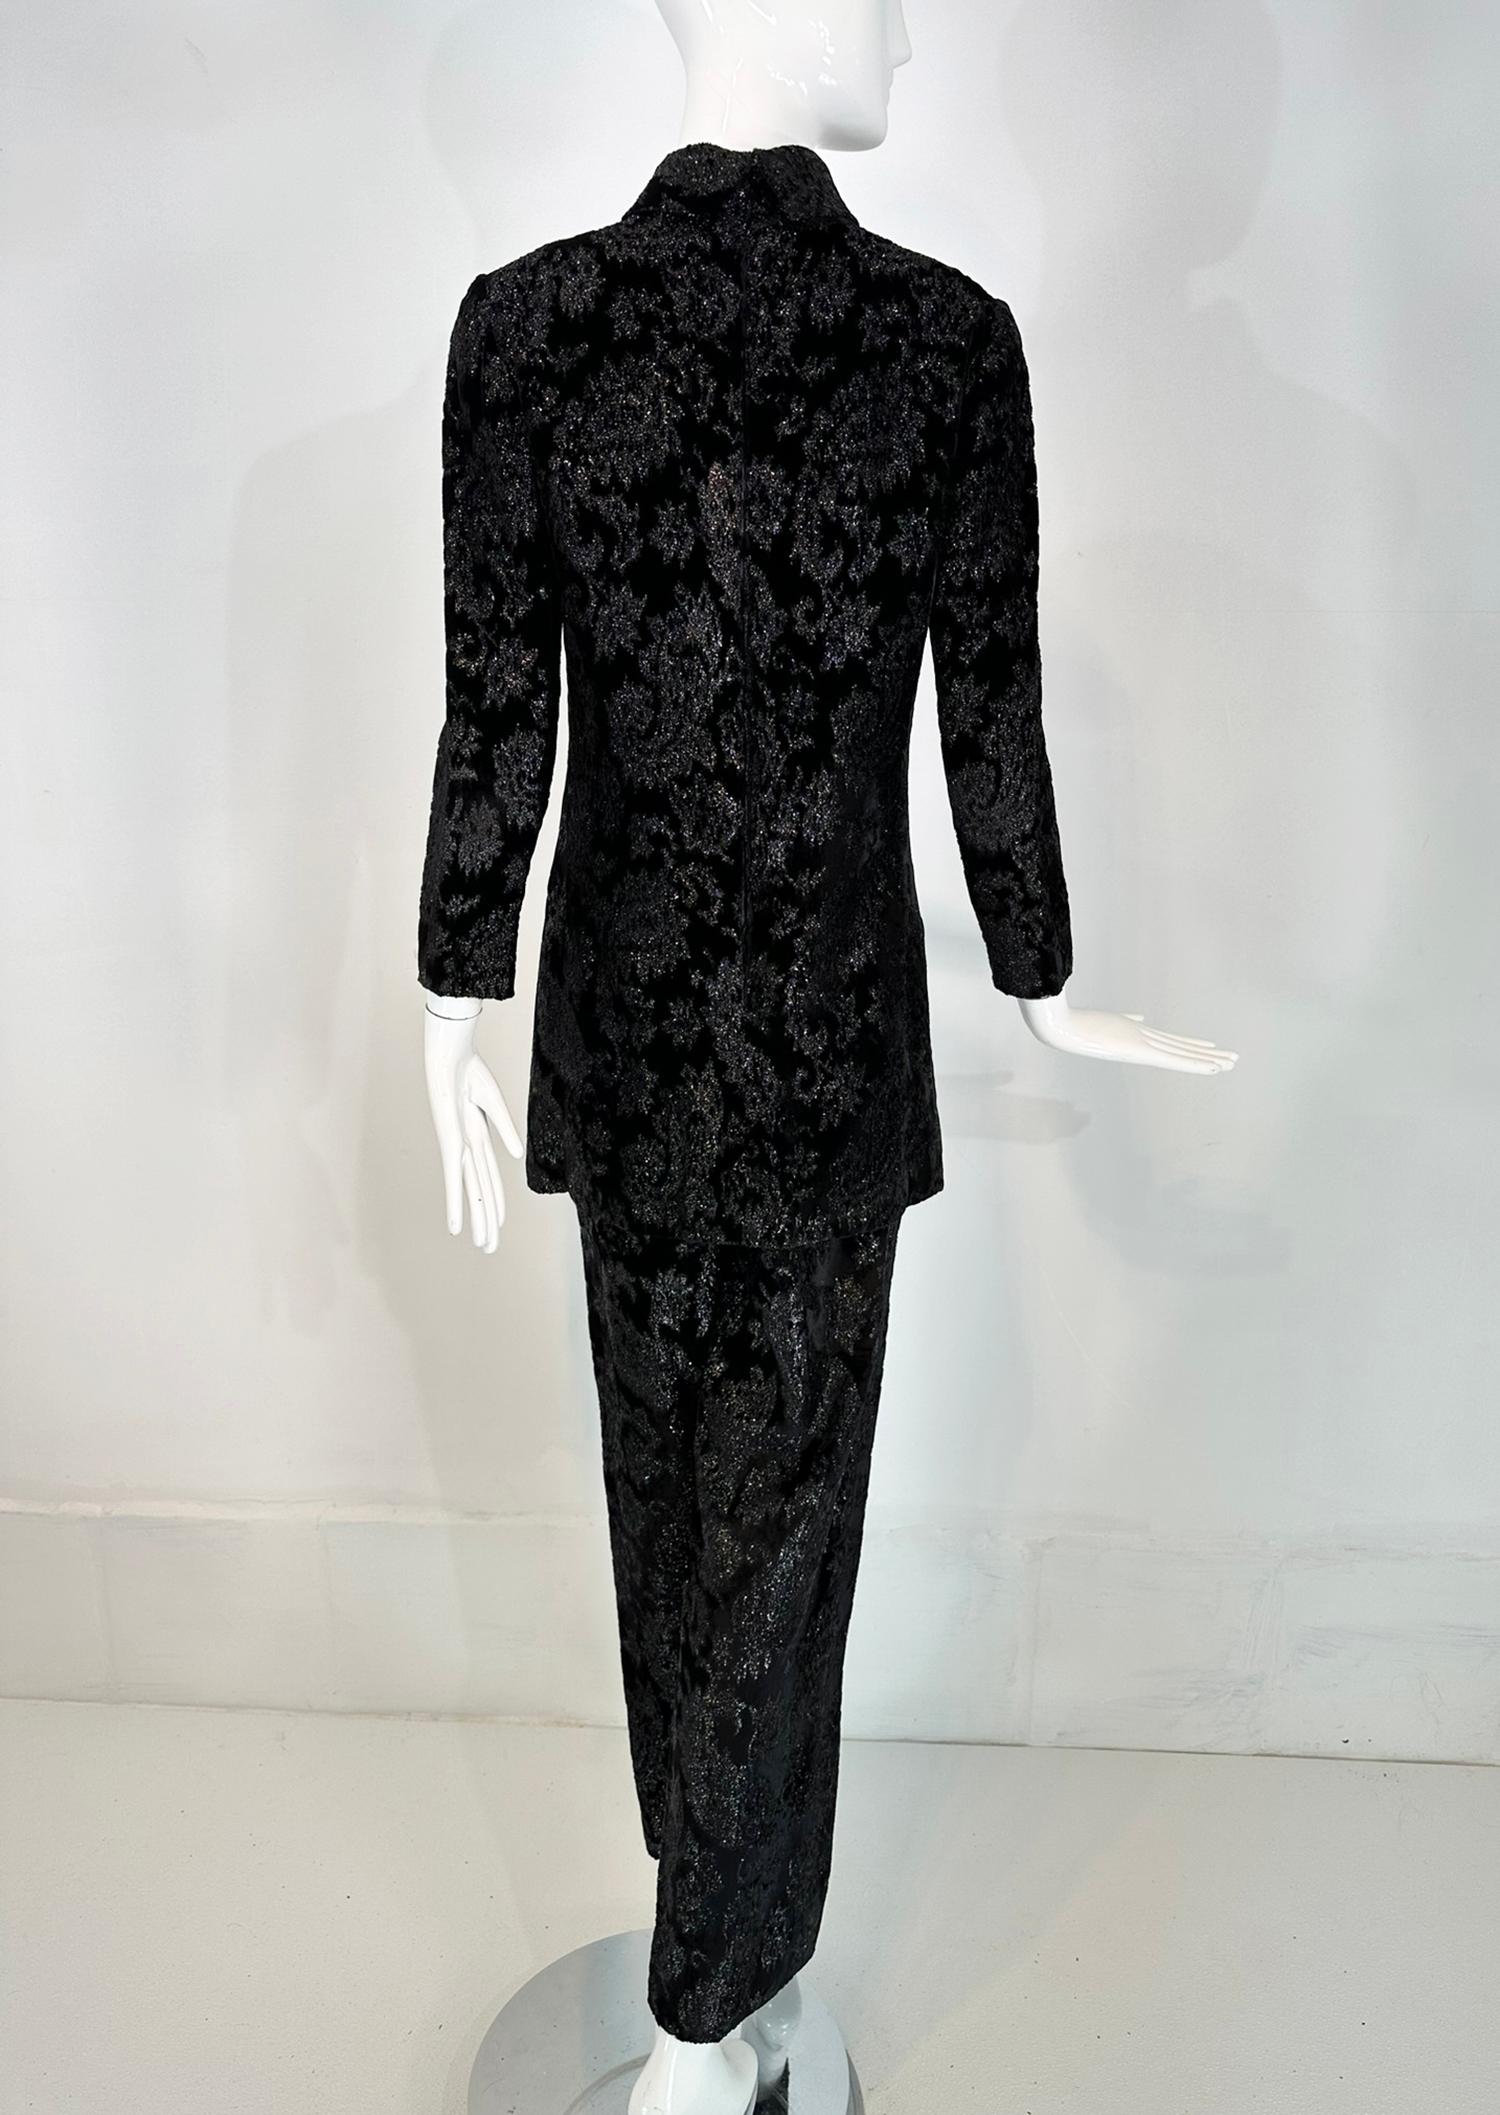 Givenchy Black Princess Seam Glittery Paisley Cut Velvet Tunic & Pant Set 1970s For Sale 4